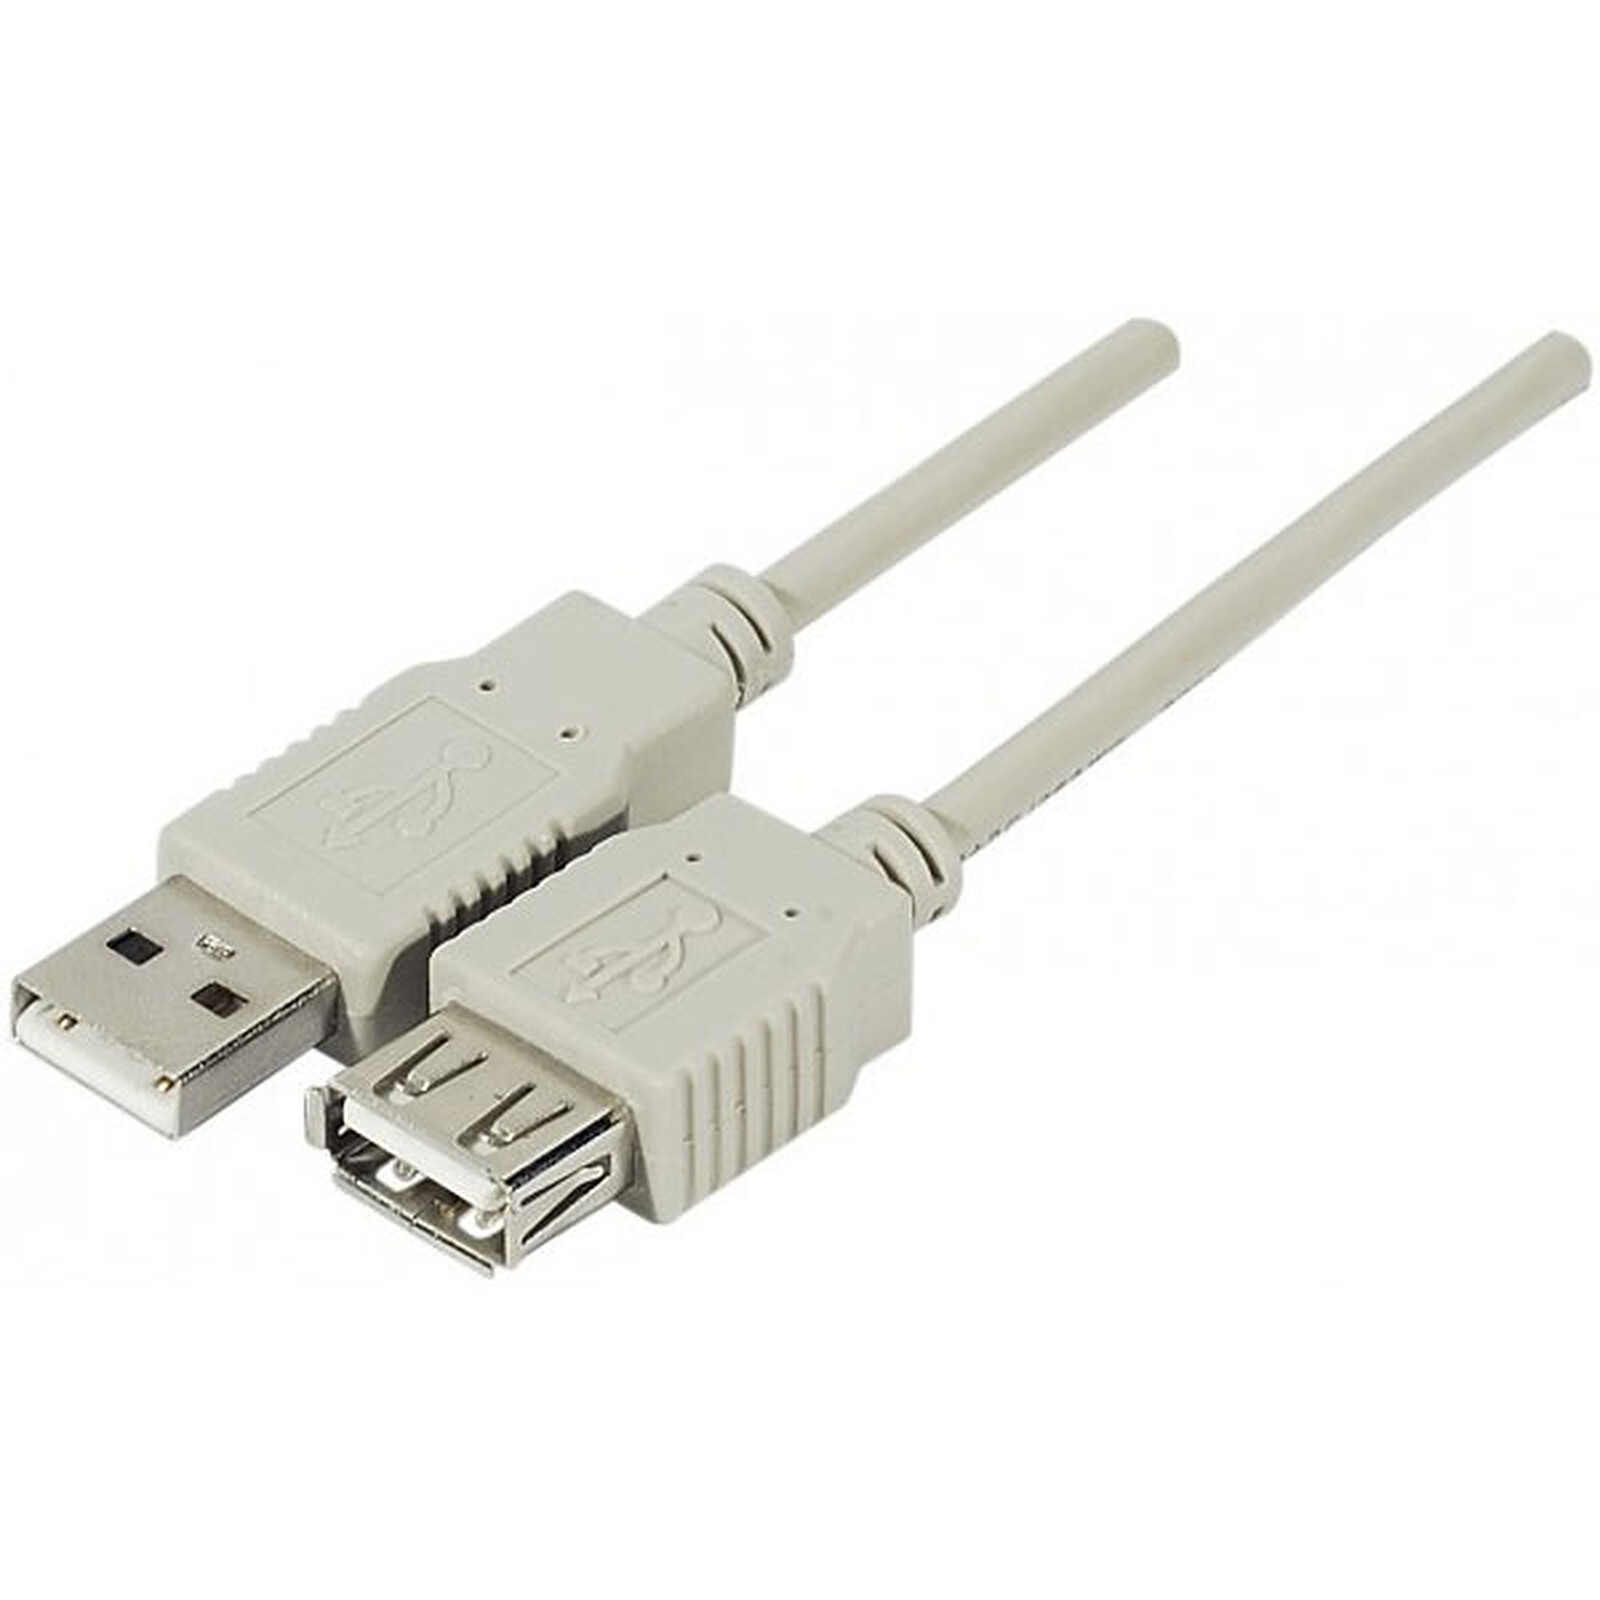 ING-BELKIN USB Câble d'extension-type A male USB-Type A femelle USB A-M/F 6 ft environ 1.83 m 